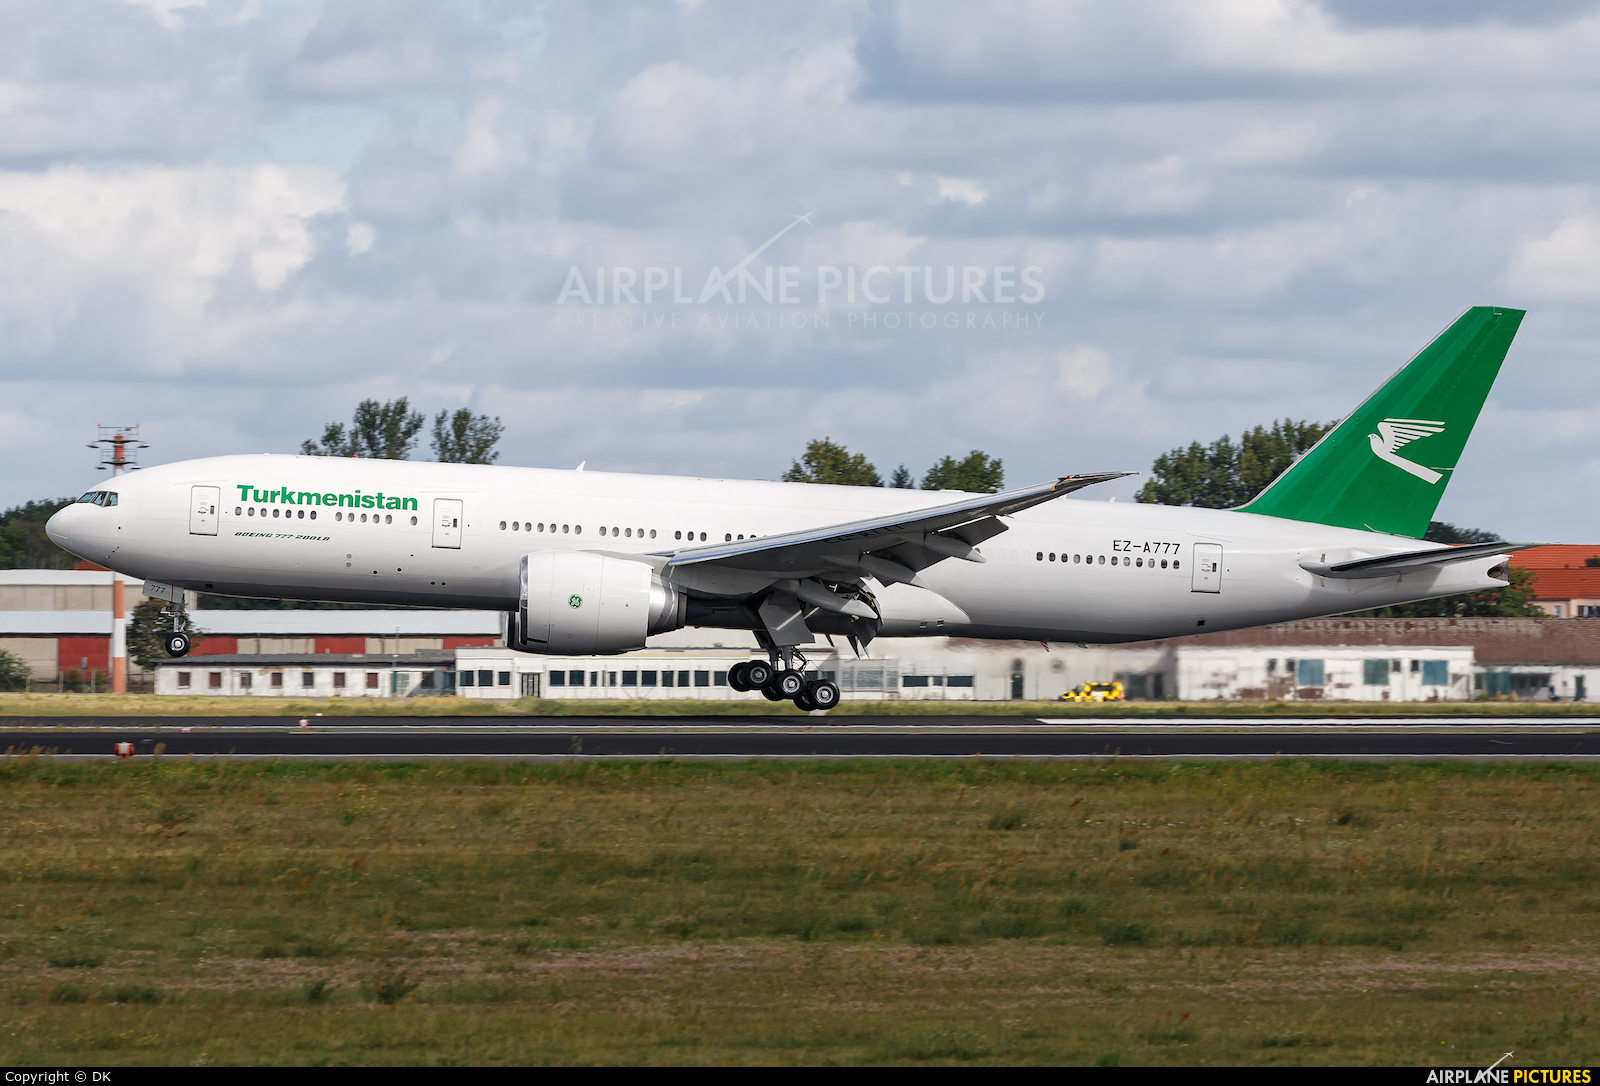 Turkmenistan Airlines EZ-A777 aircraft at Berlin - Tegel